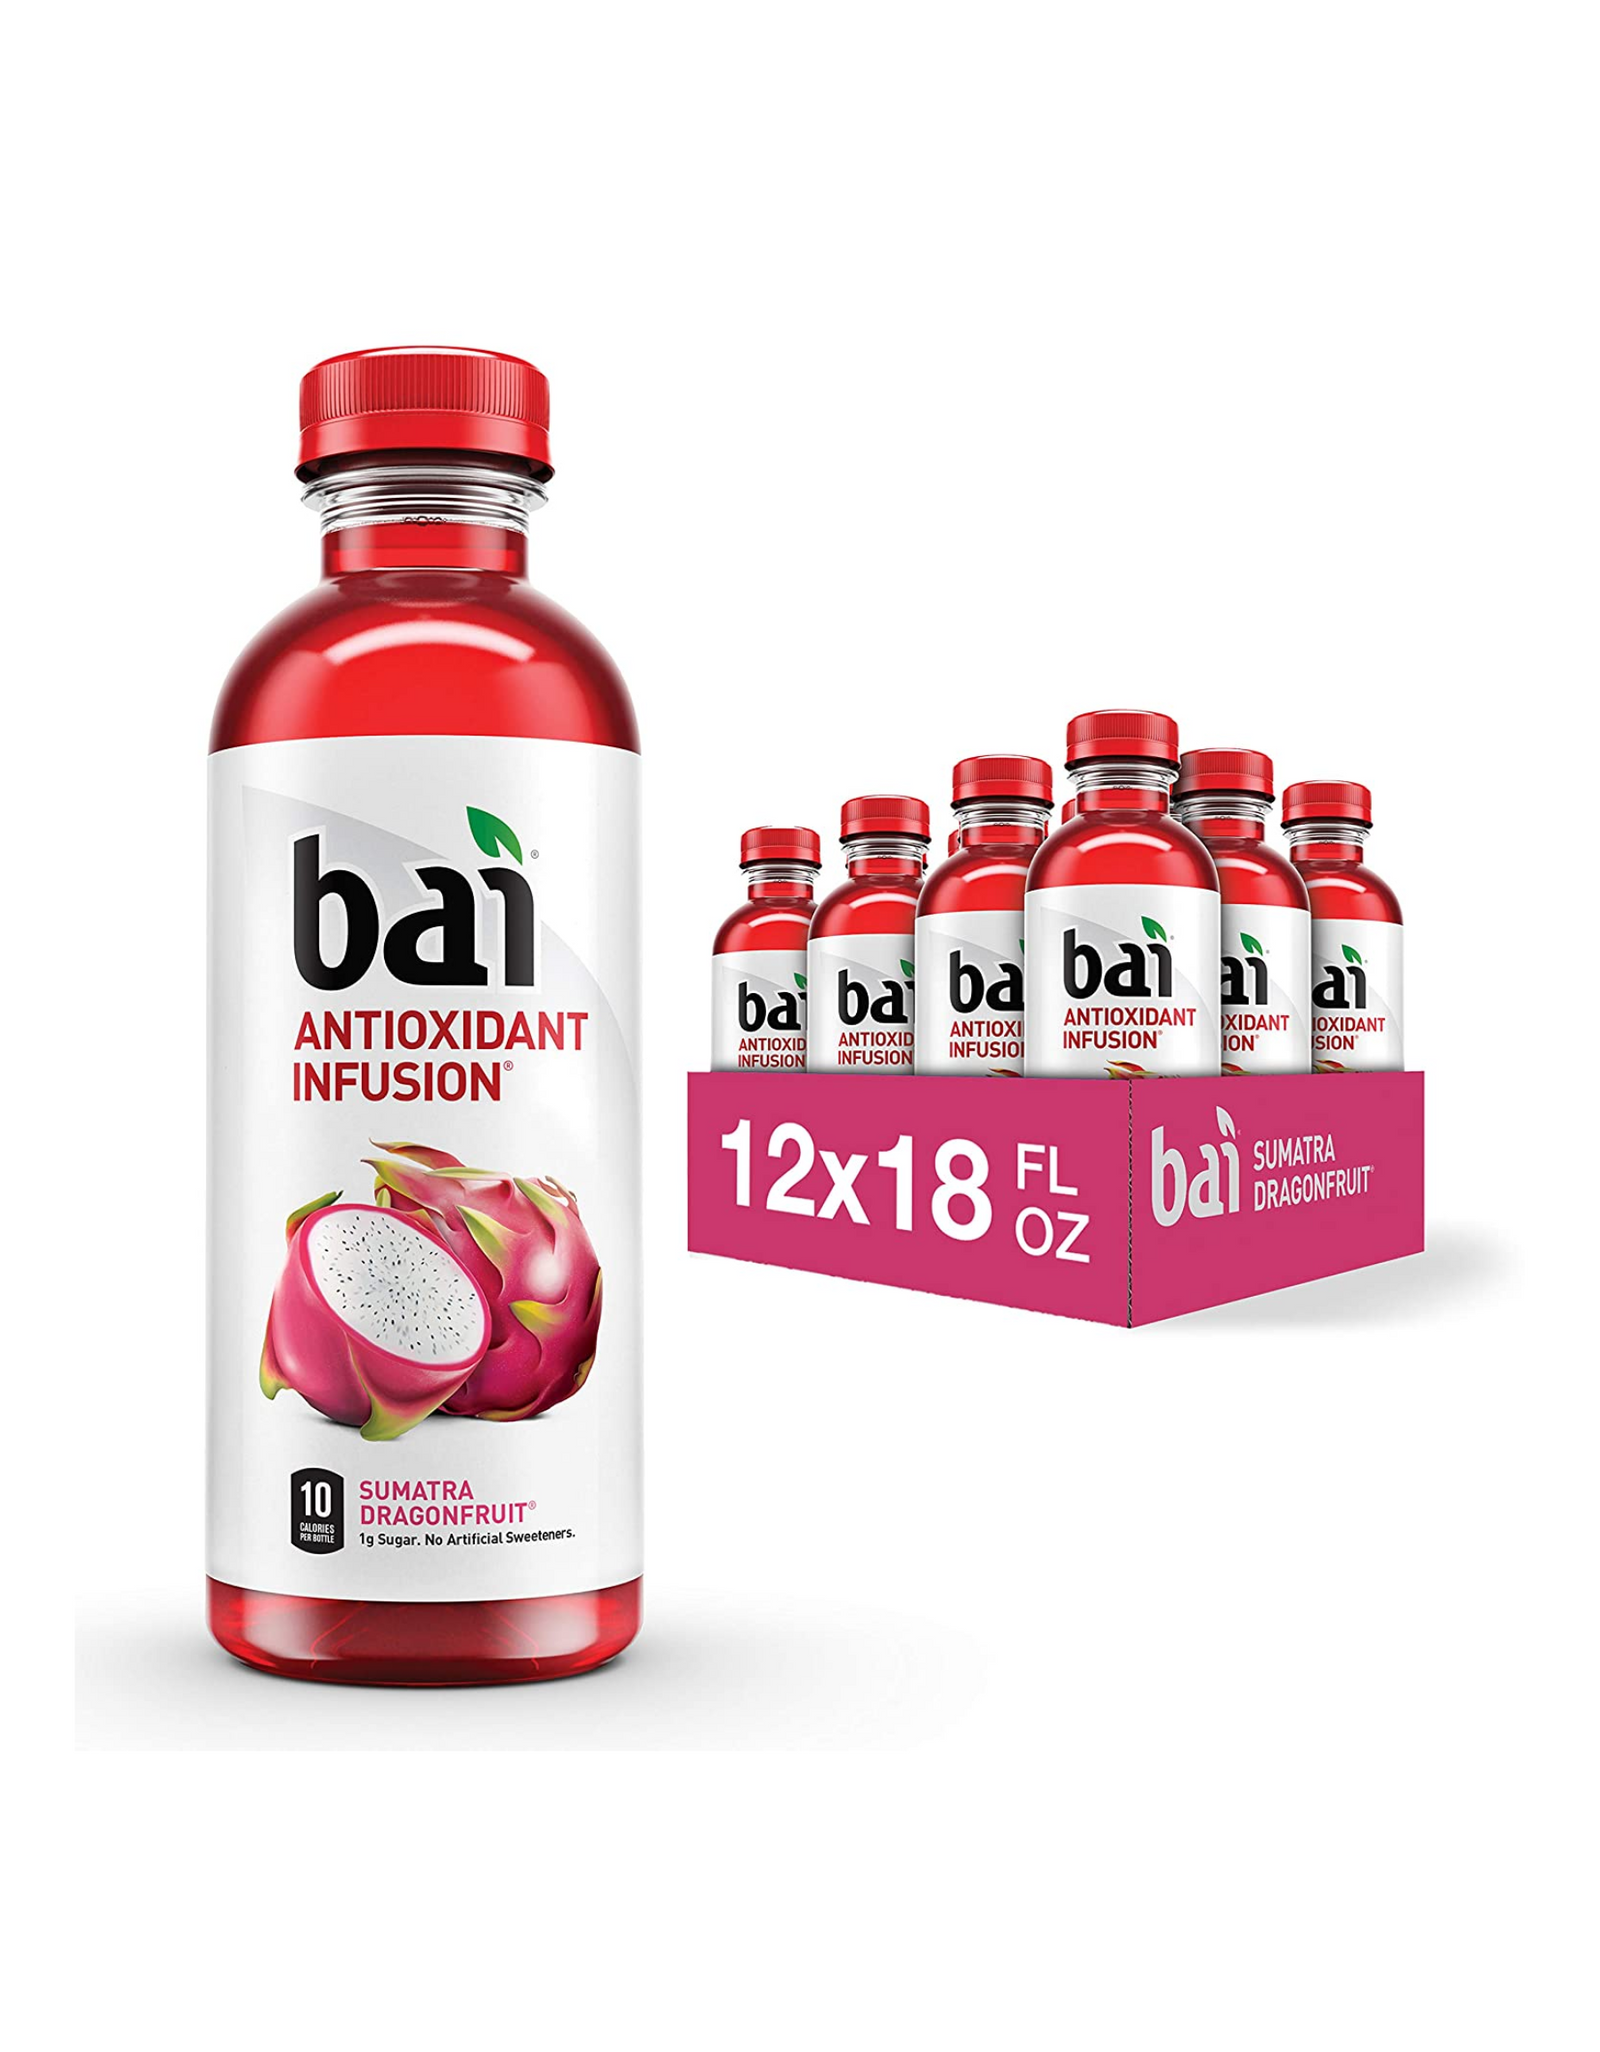 Bai Flavored Water, Sumatra Dragonfruit, Antioxidant Infusion, 18 fl oz (Pack of 12)